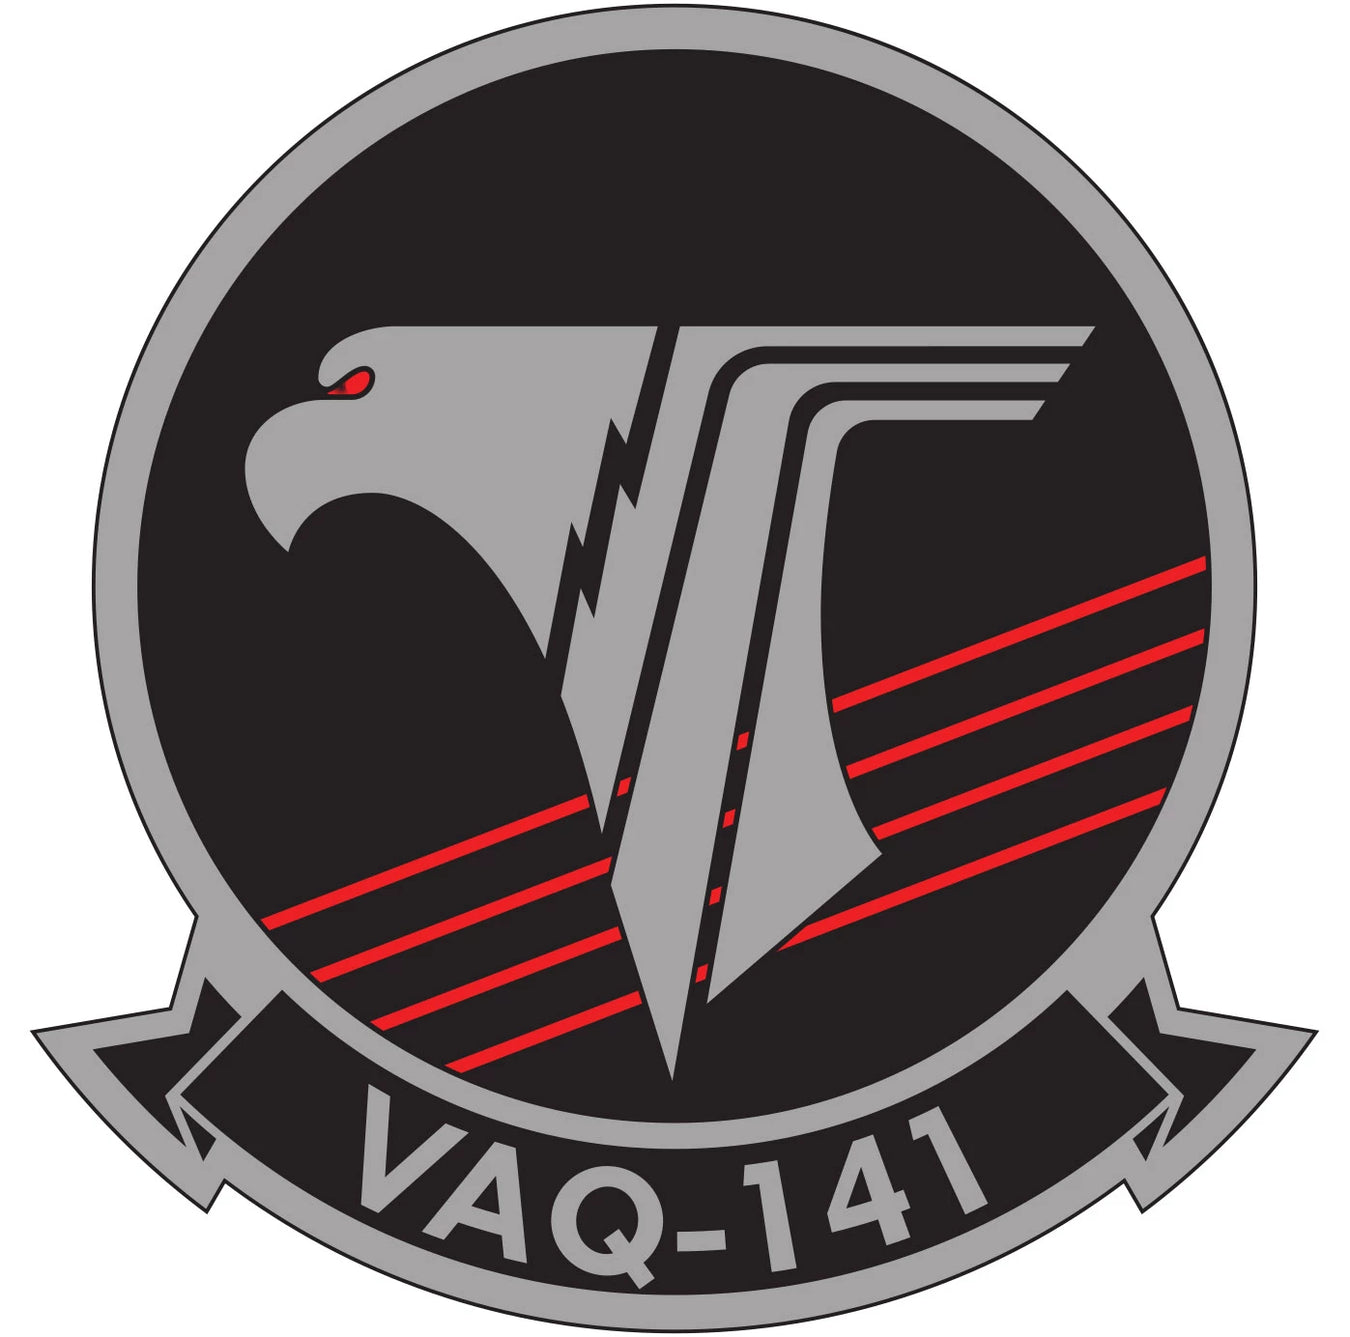 Electronic Attack Squadron 141 (VAQ-141)